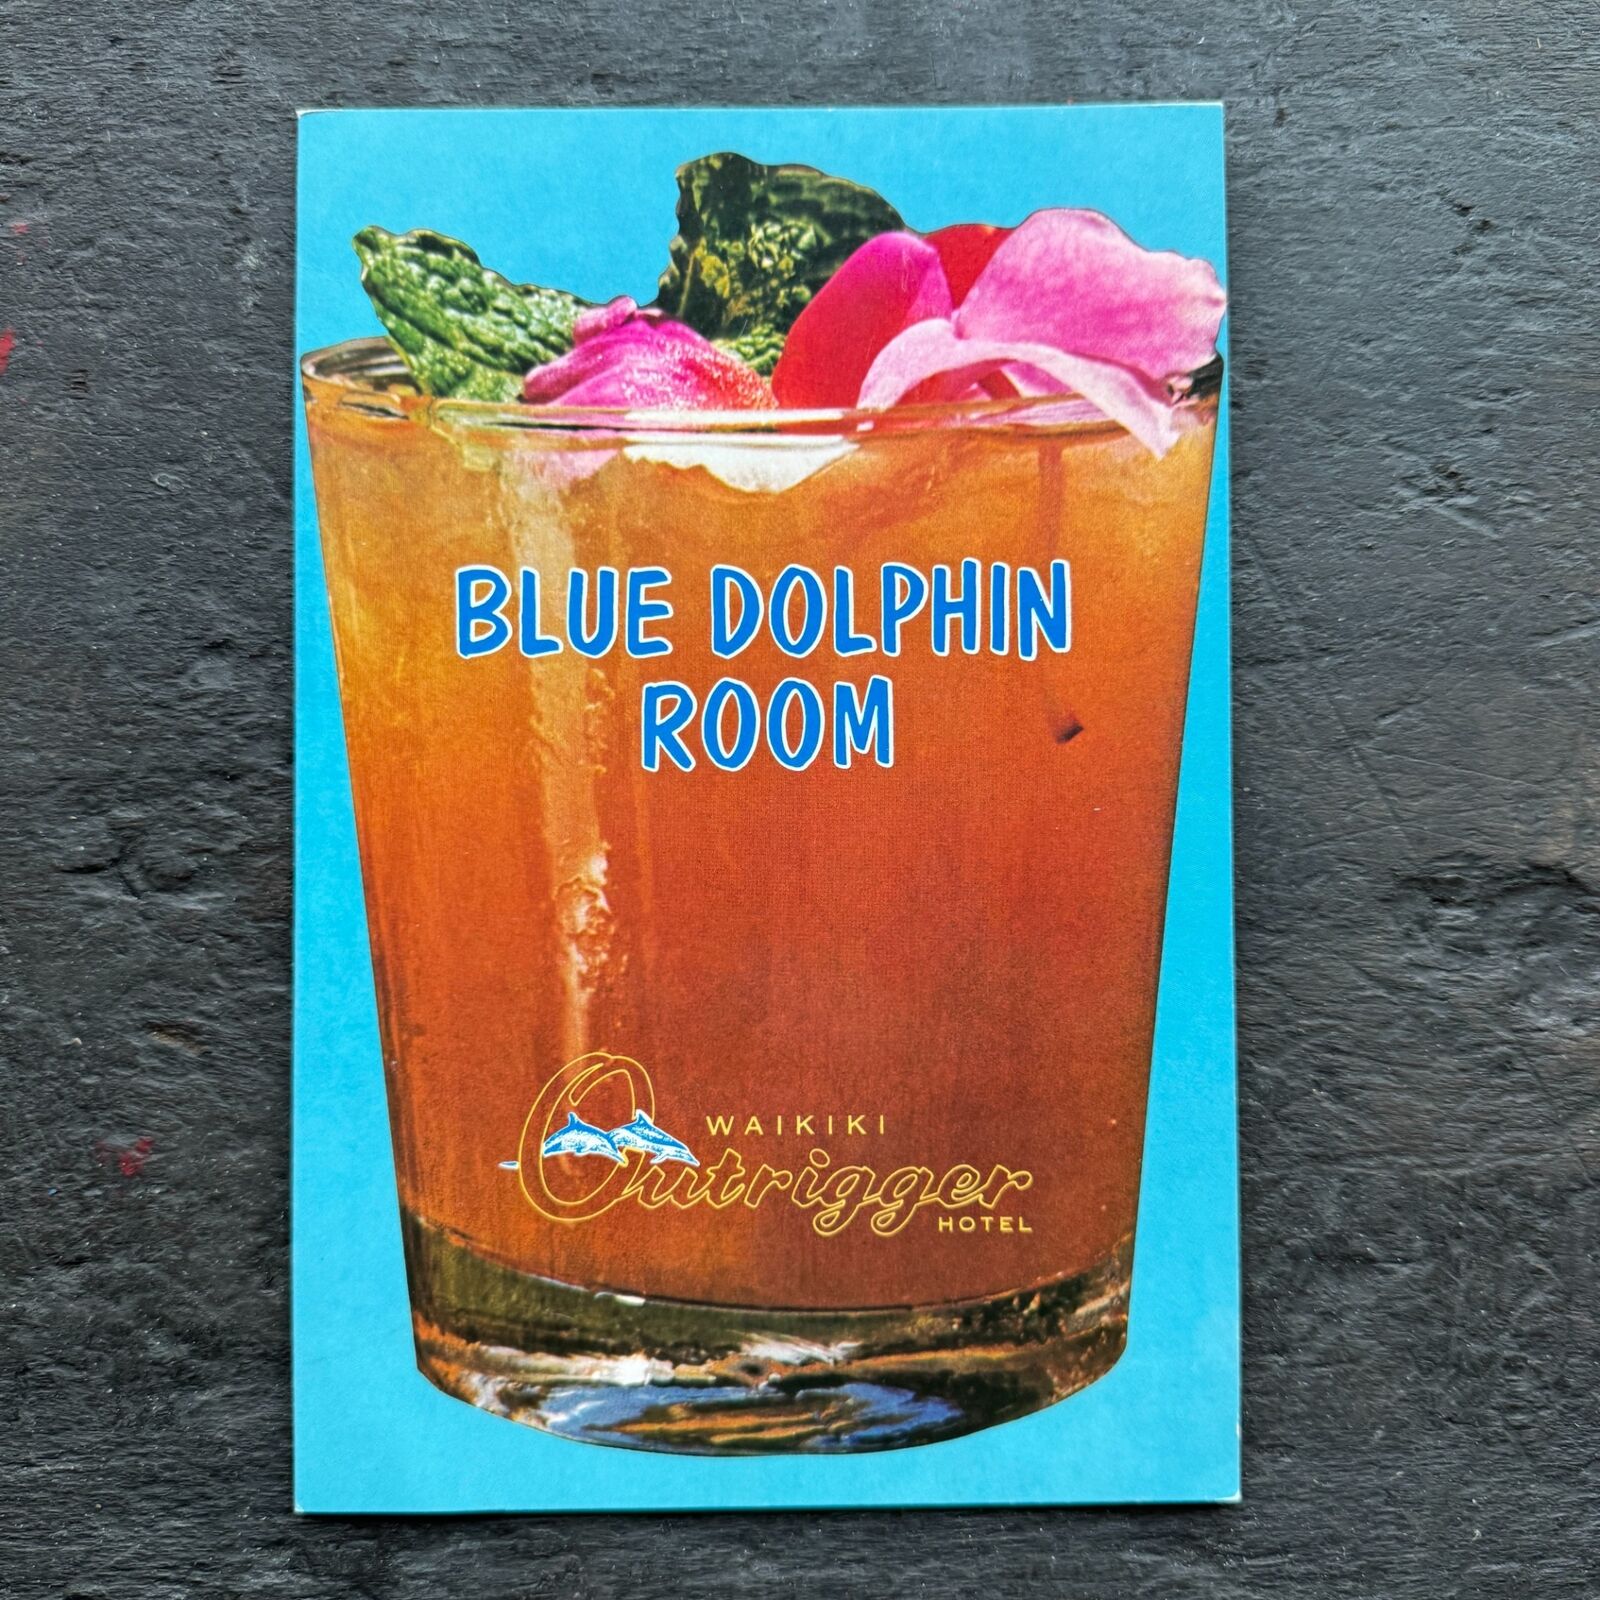 VTG 1970s BLUE DOLPHIN ROOM Tiki Drink / Bar Menu Waikiki Outrigger Hotel Hawaii